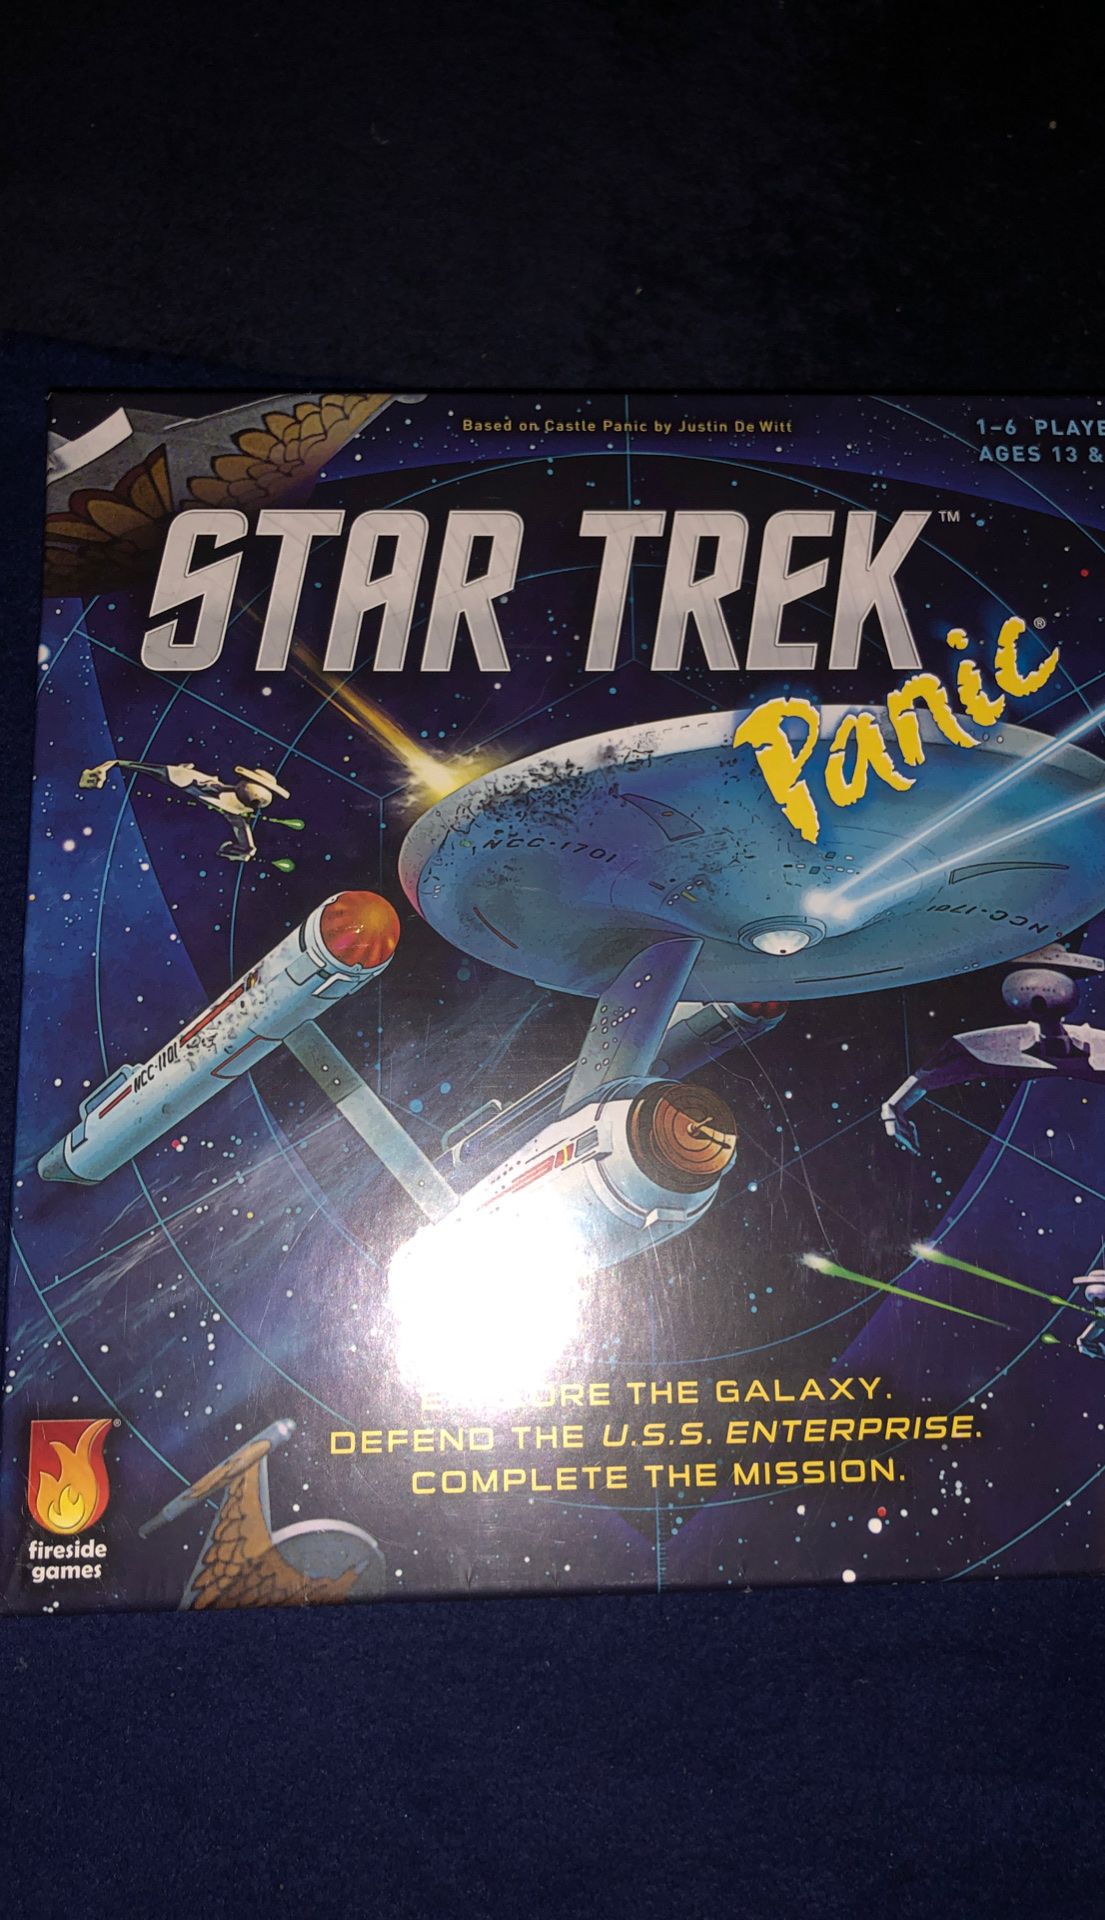 Star Trek panic kid games